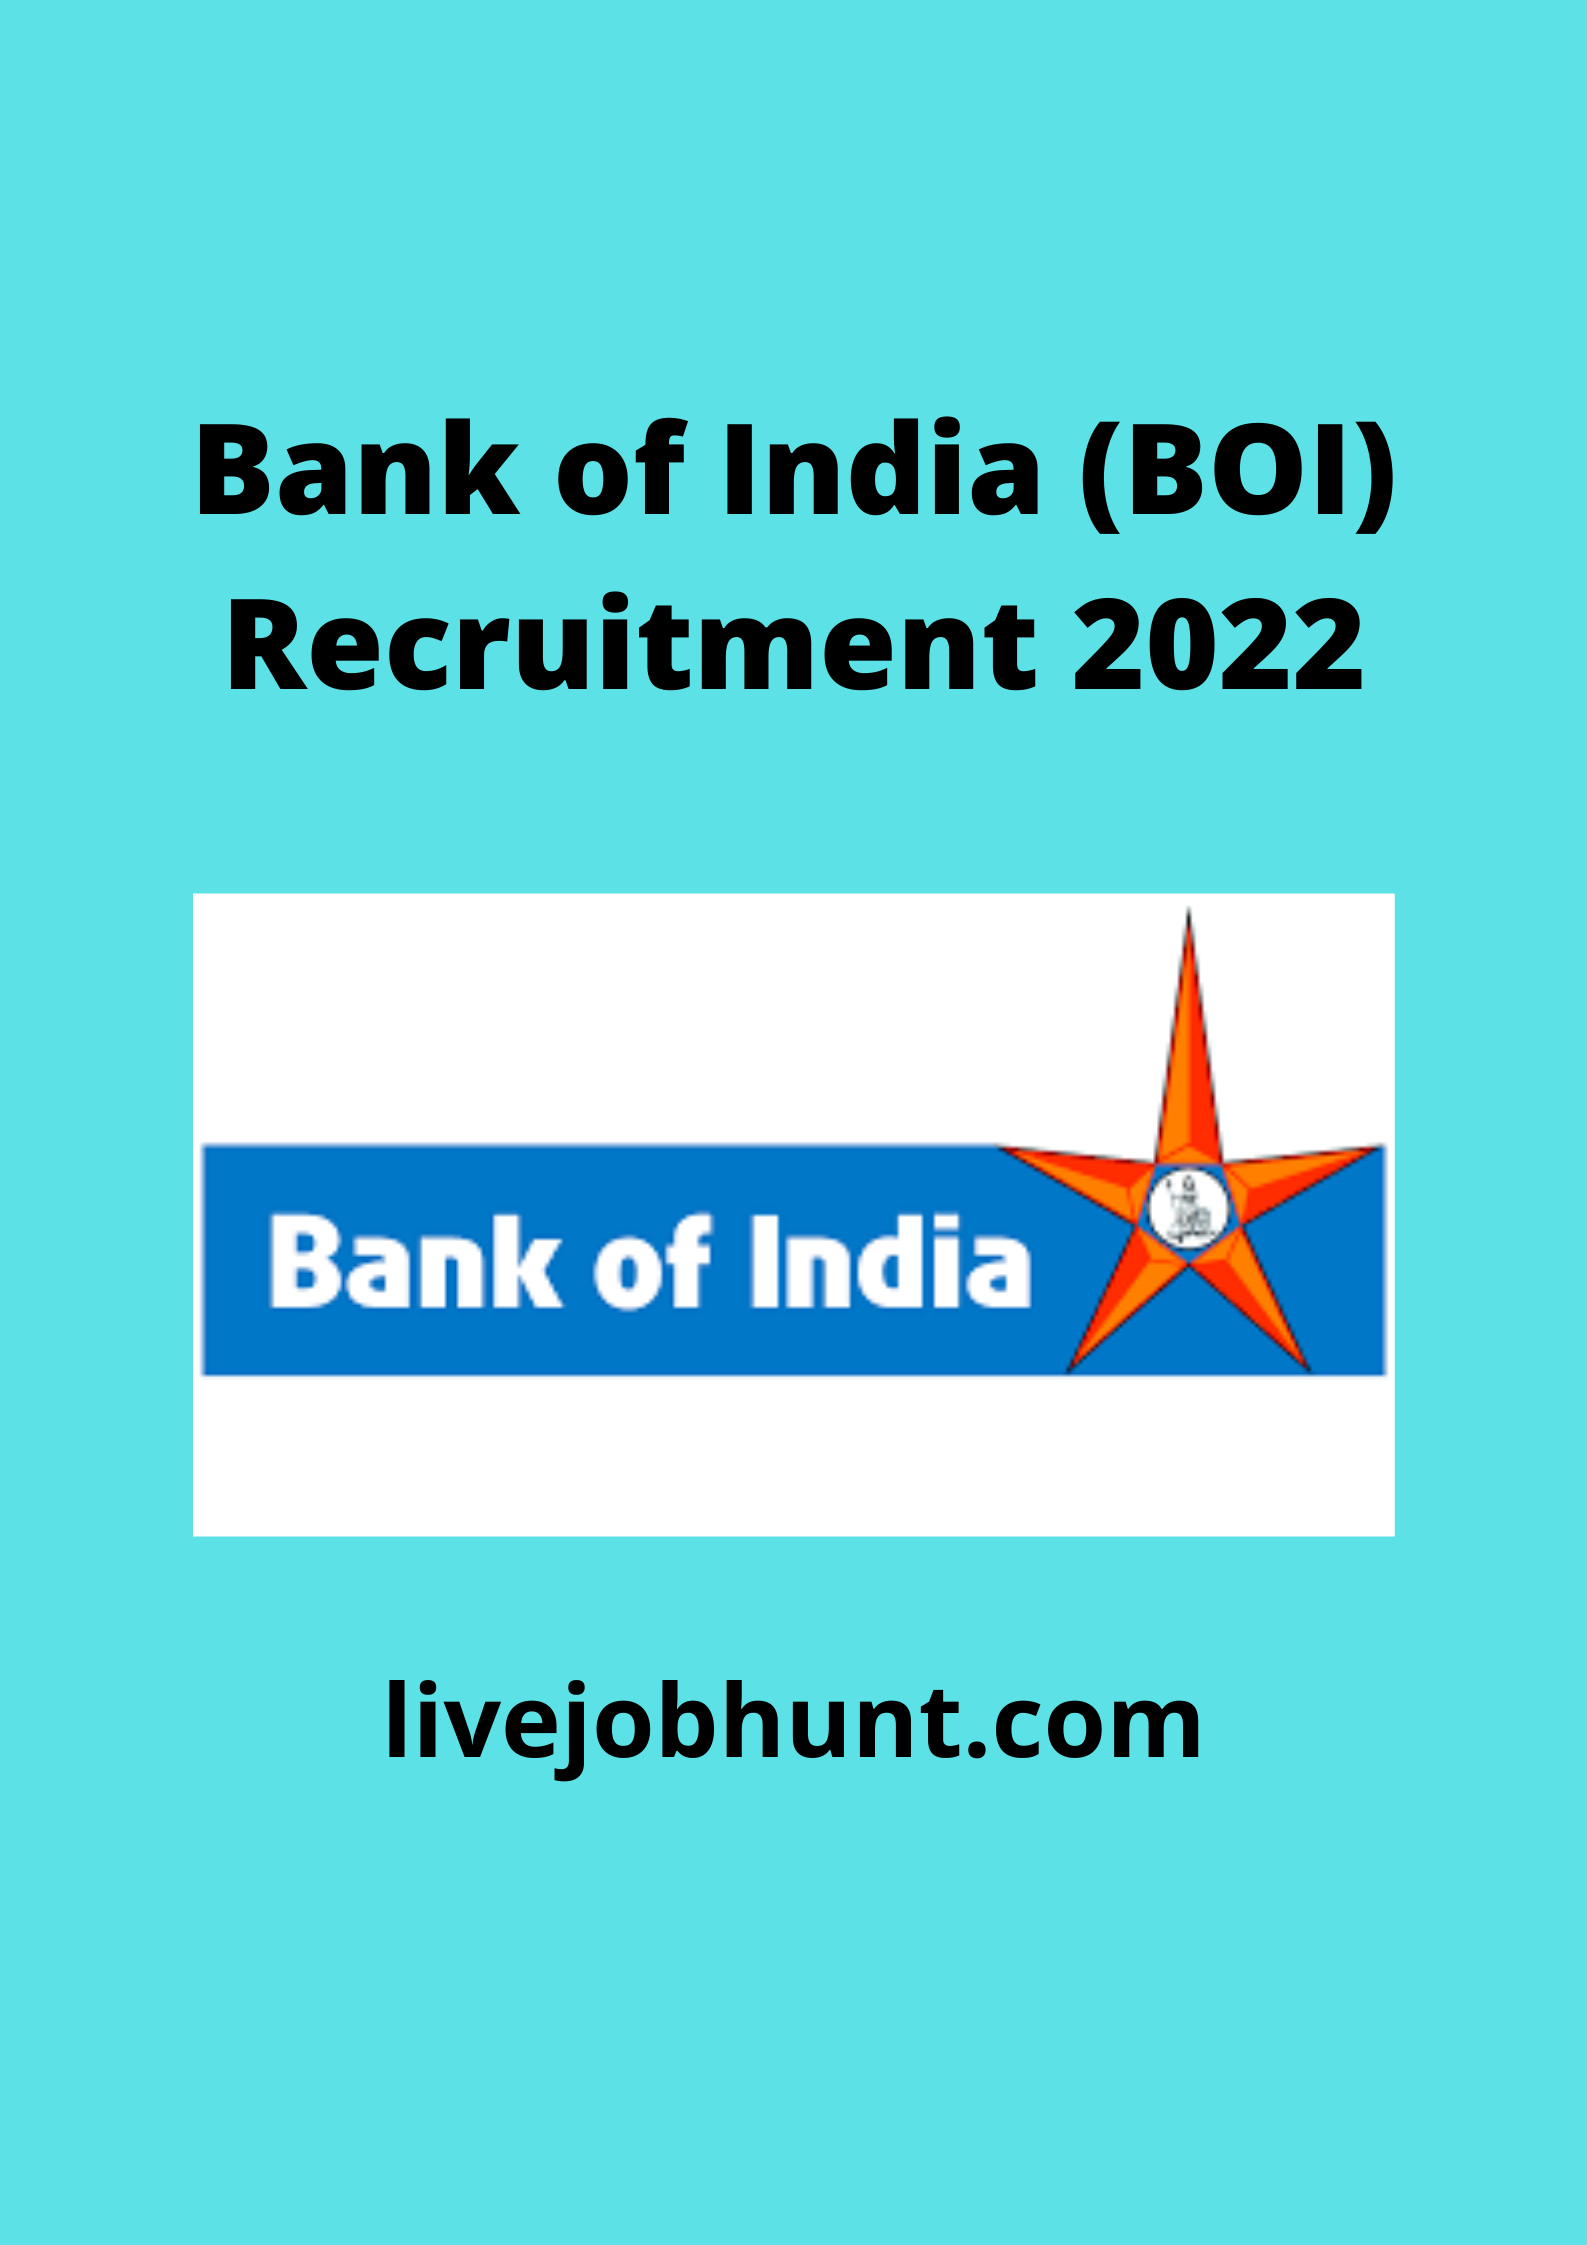 Bank of India (BOI) Recruitment 2022